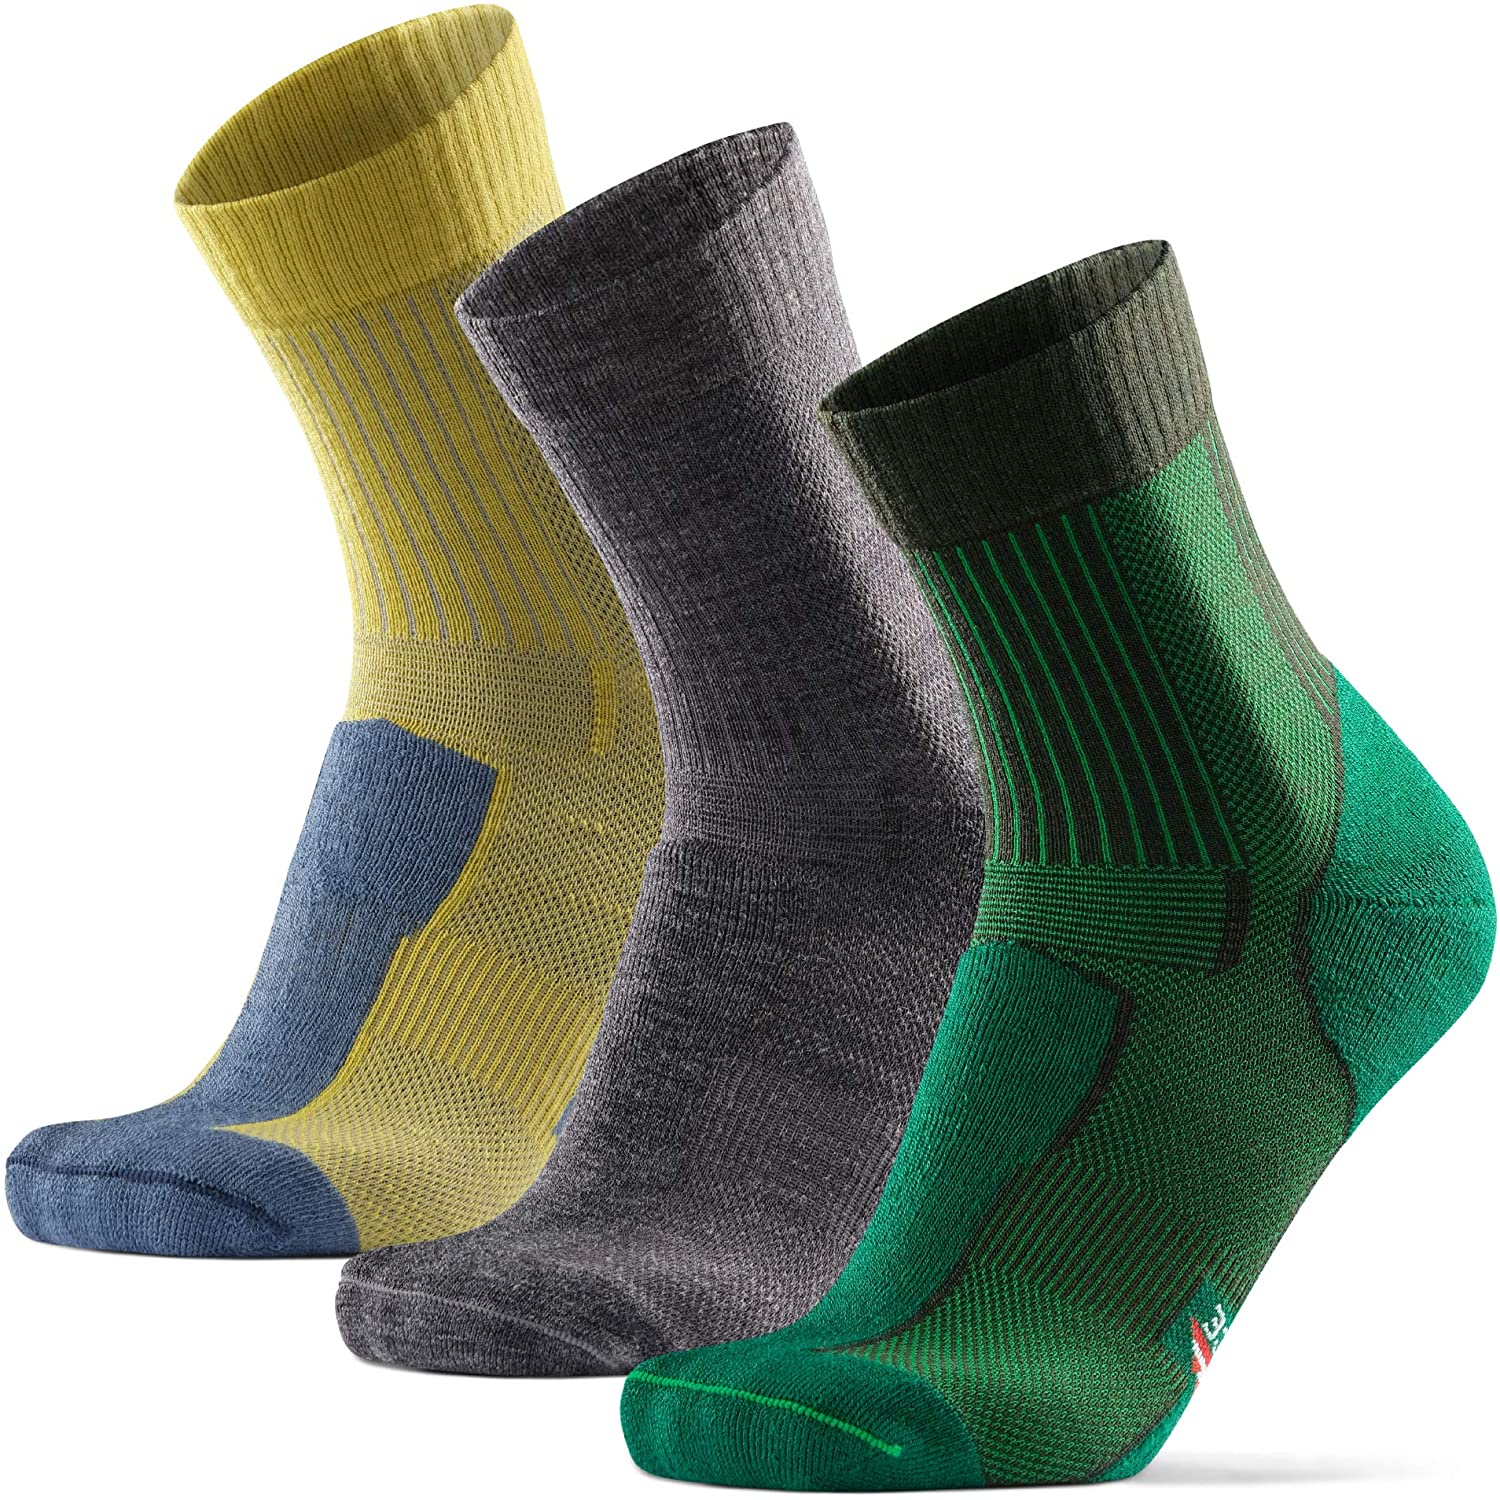 Danish Endurance Cycling Regular Socks 3-pack - Regular socks